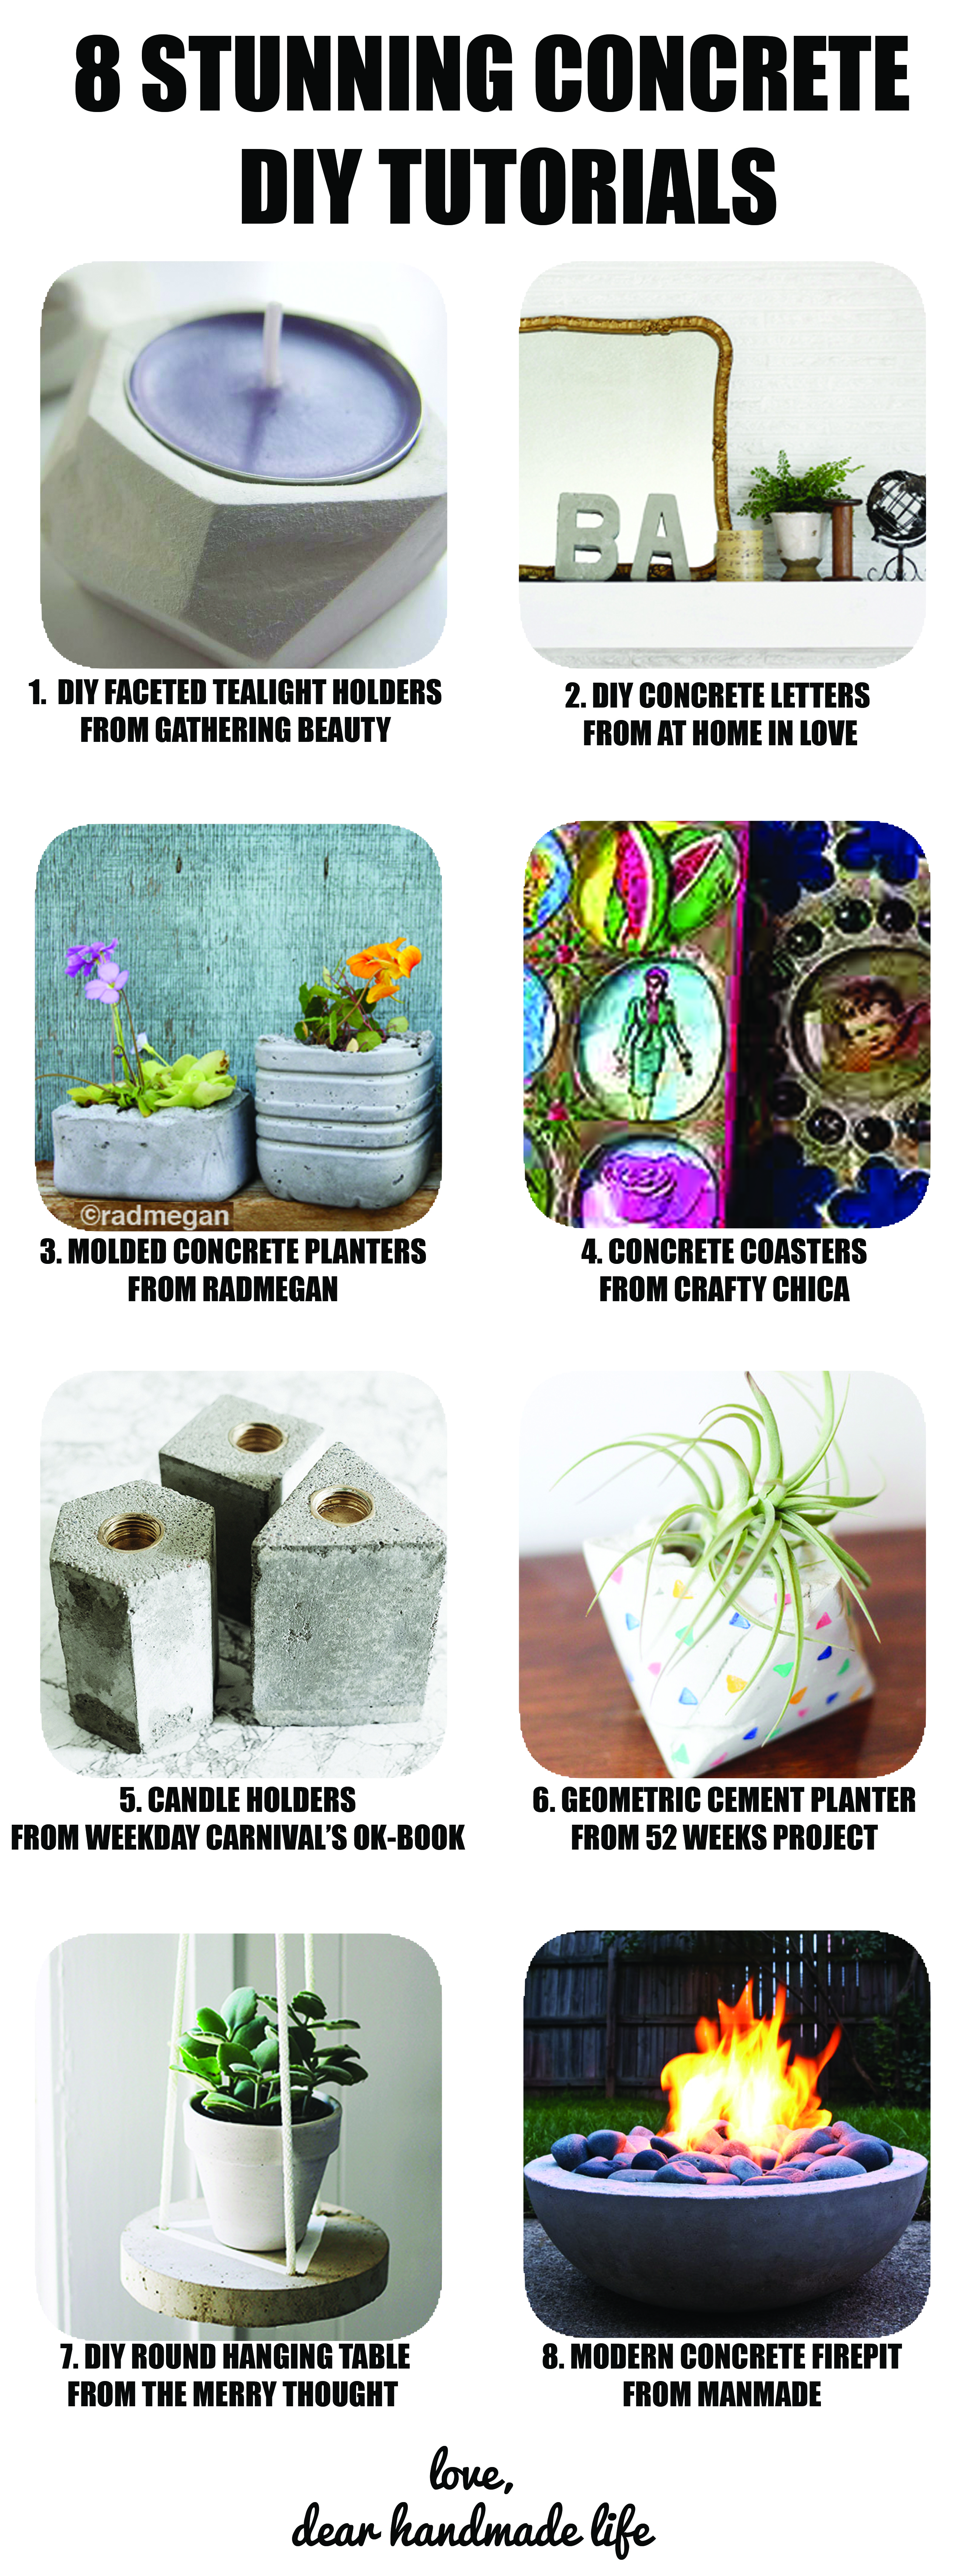 eight stunning concrete diy craft tutorials - Dear Handmade Life